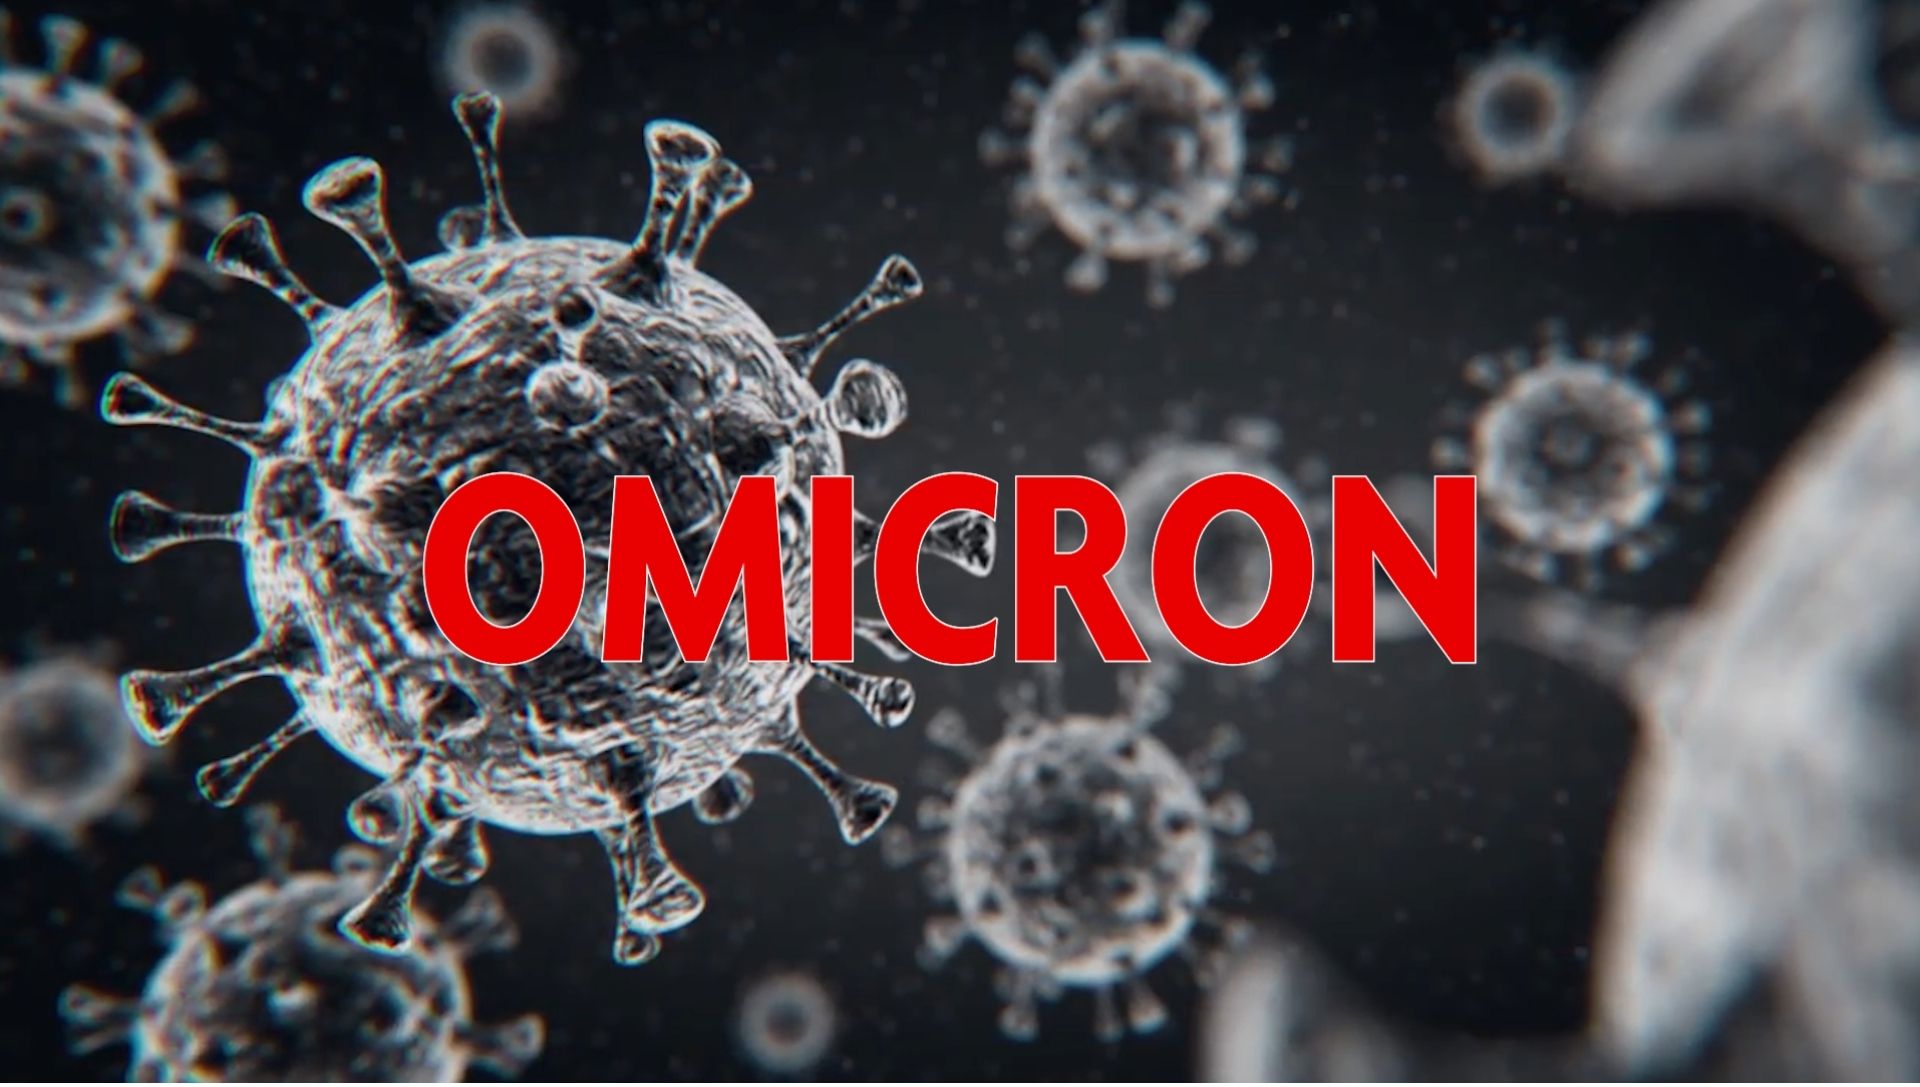 omicron - the next plague?